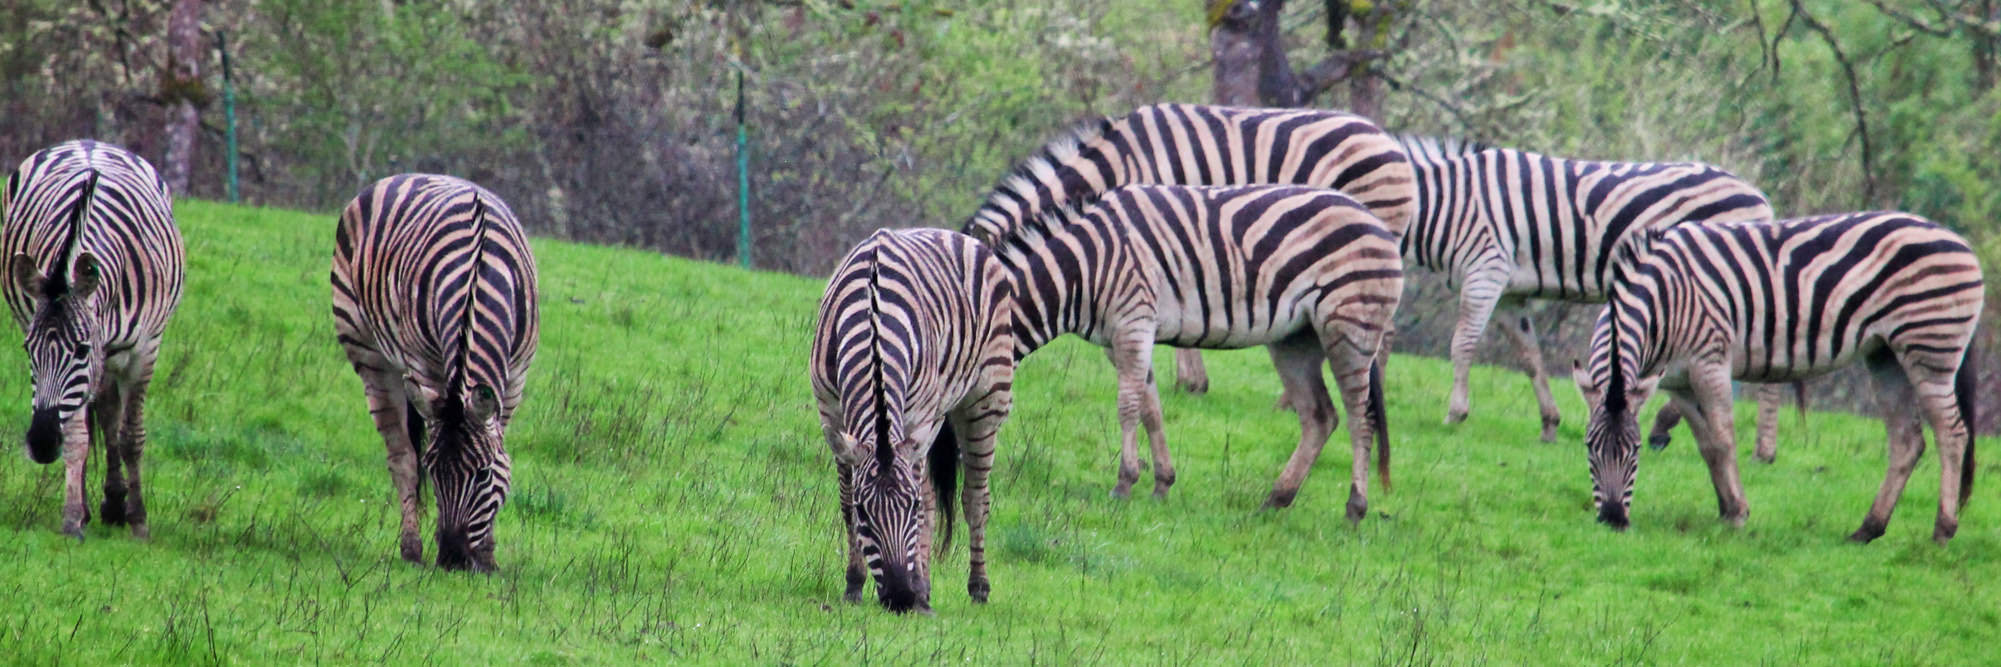 A dazzle of zebras grazing